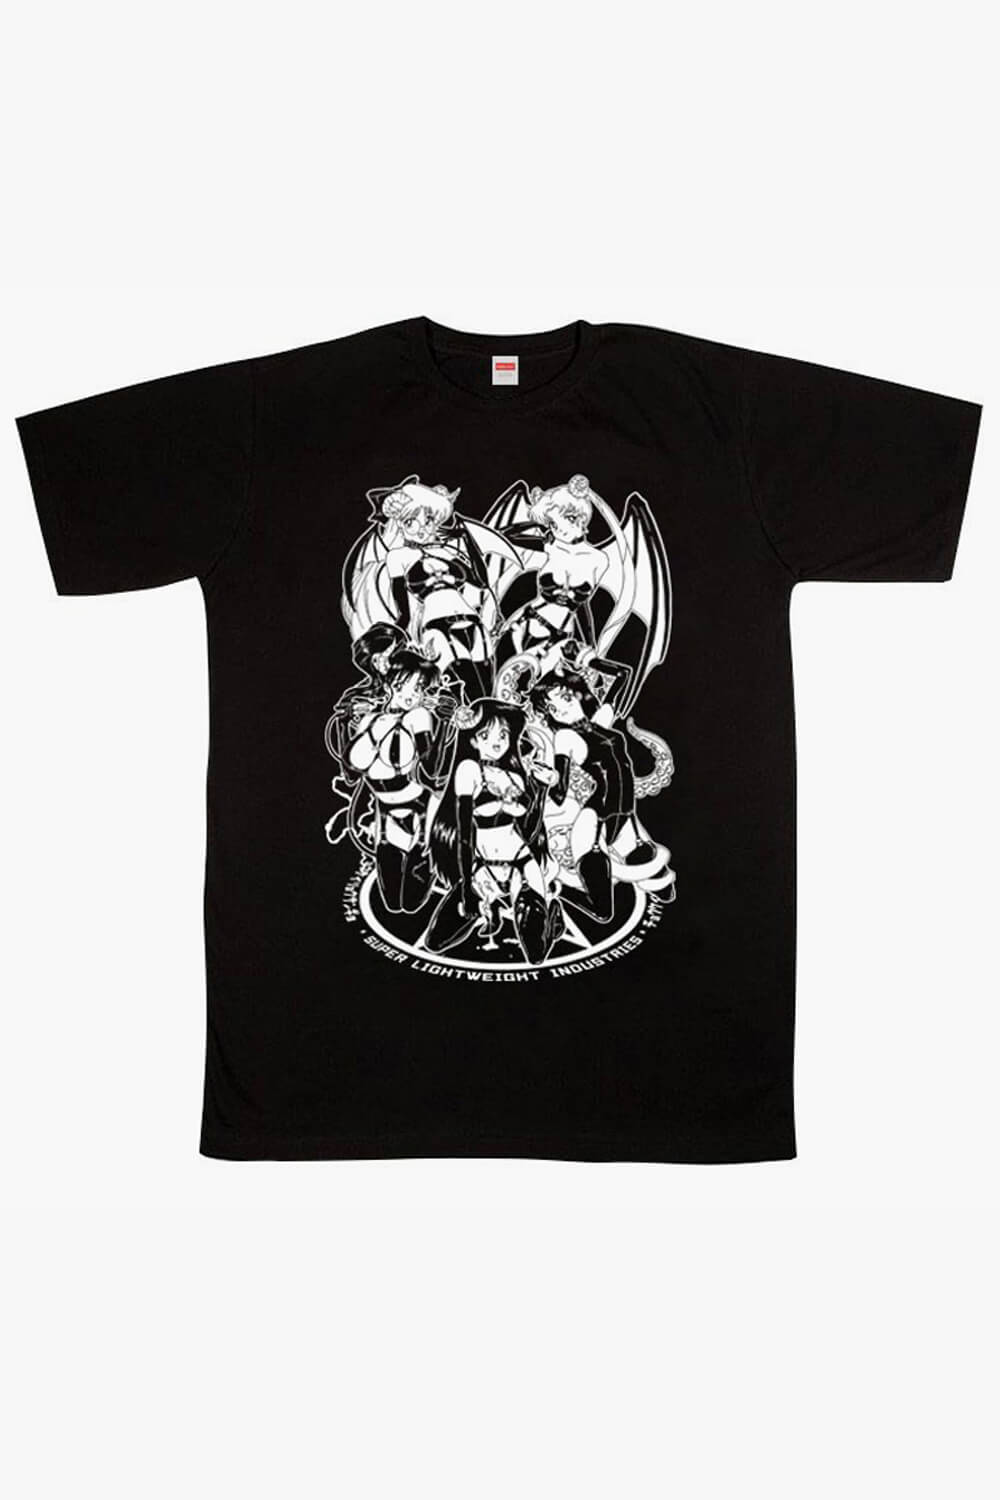 Succubus Cult Anime Girl HVY BLK T-Shirt Bondagecore